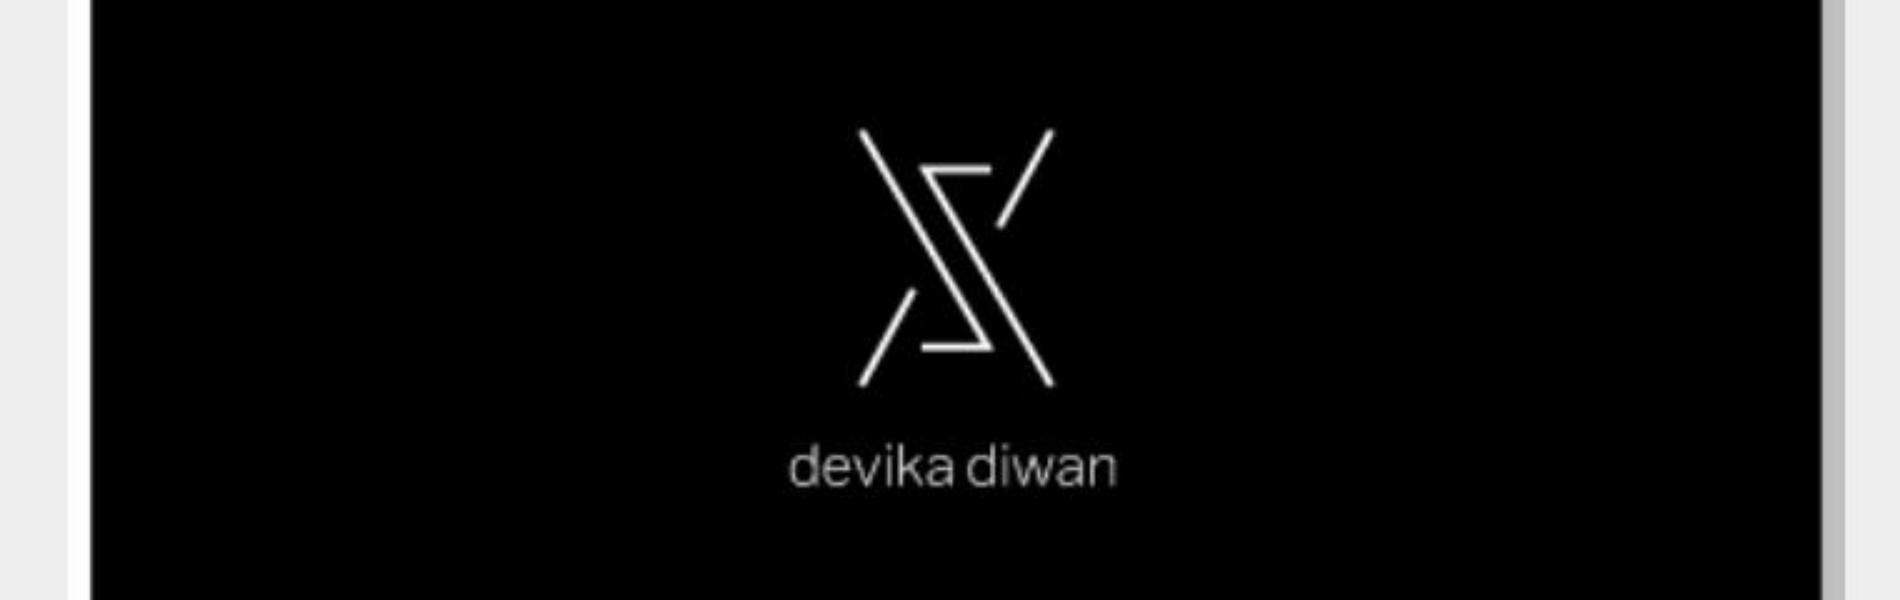 Style it your way-Devika diwan 